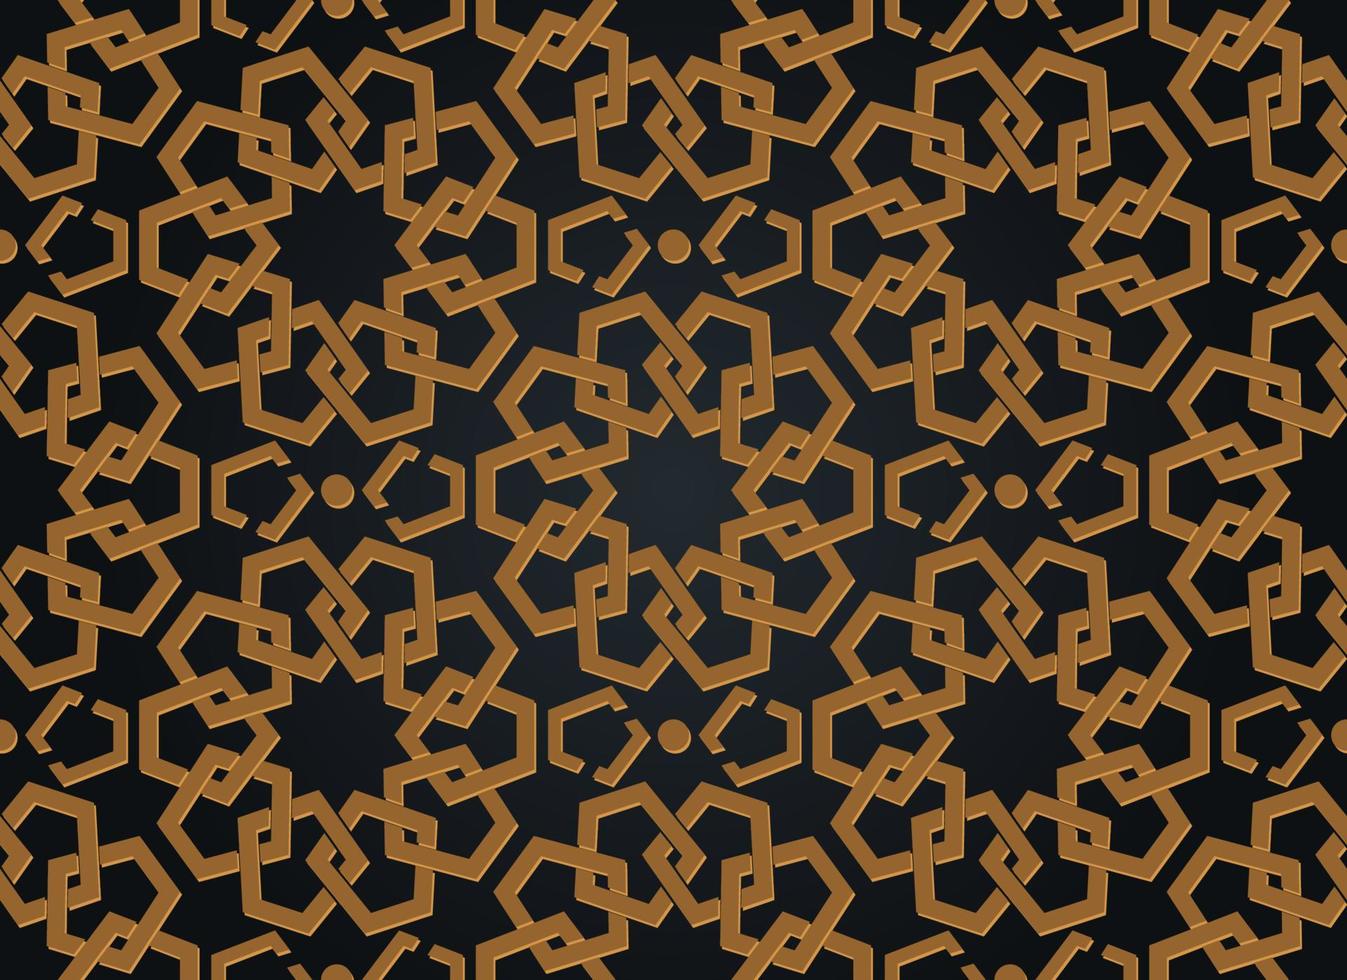 patrón islámico impecable, motivo persa moderno dorado. ramadan banner estilo árabe, elementos de patrón redondo. ornamento geométrico superpuesto símbolo musulmán, vector aislado sobre fondo negro